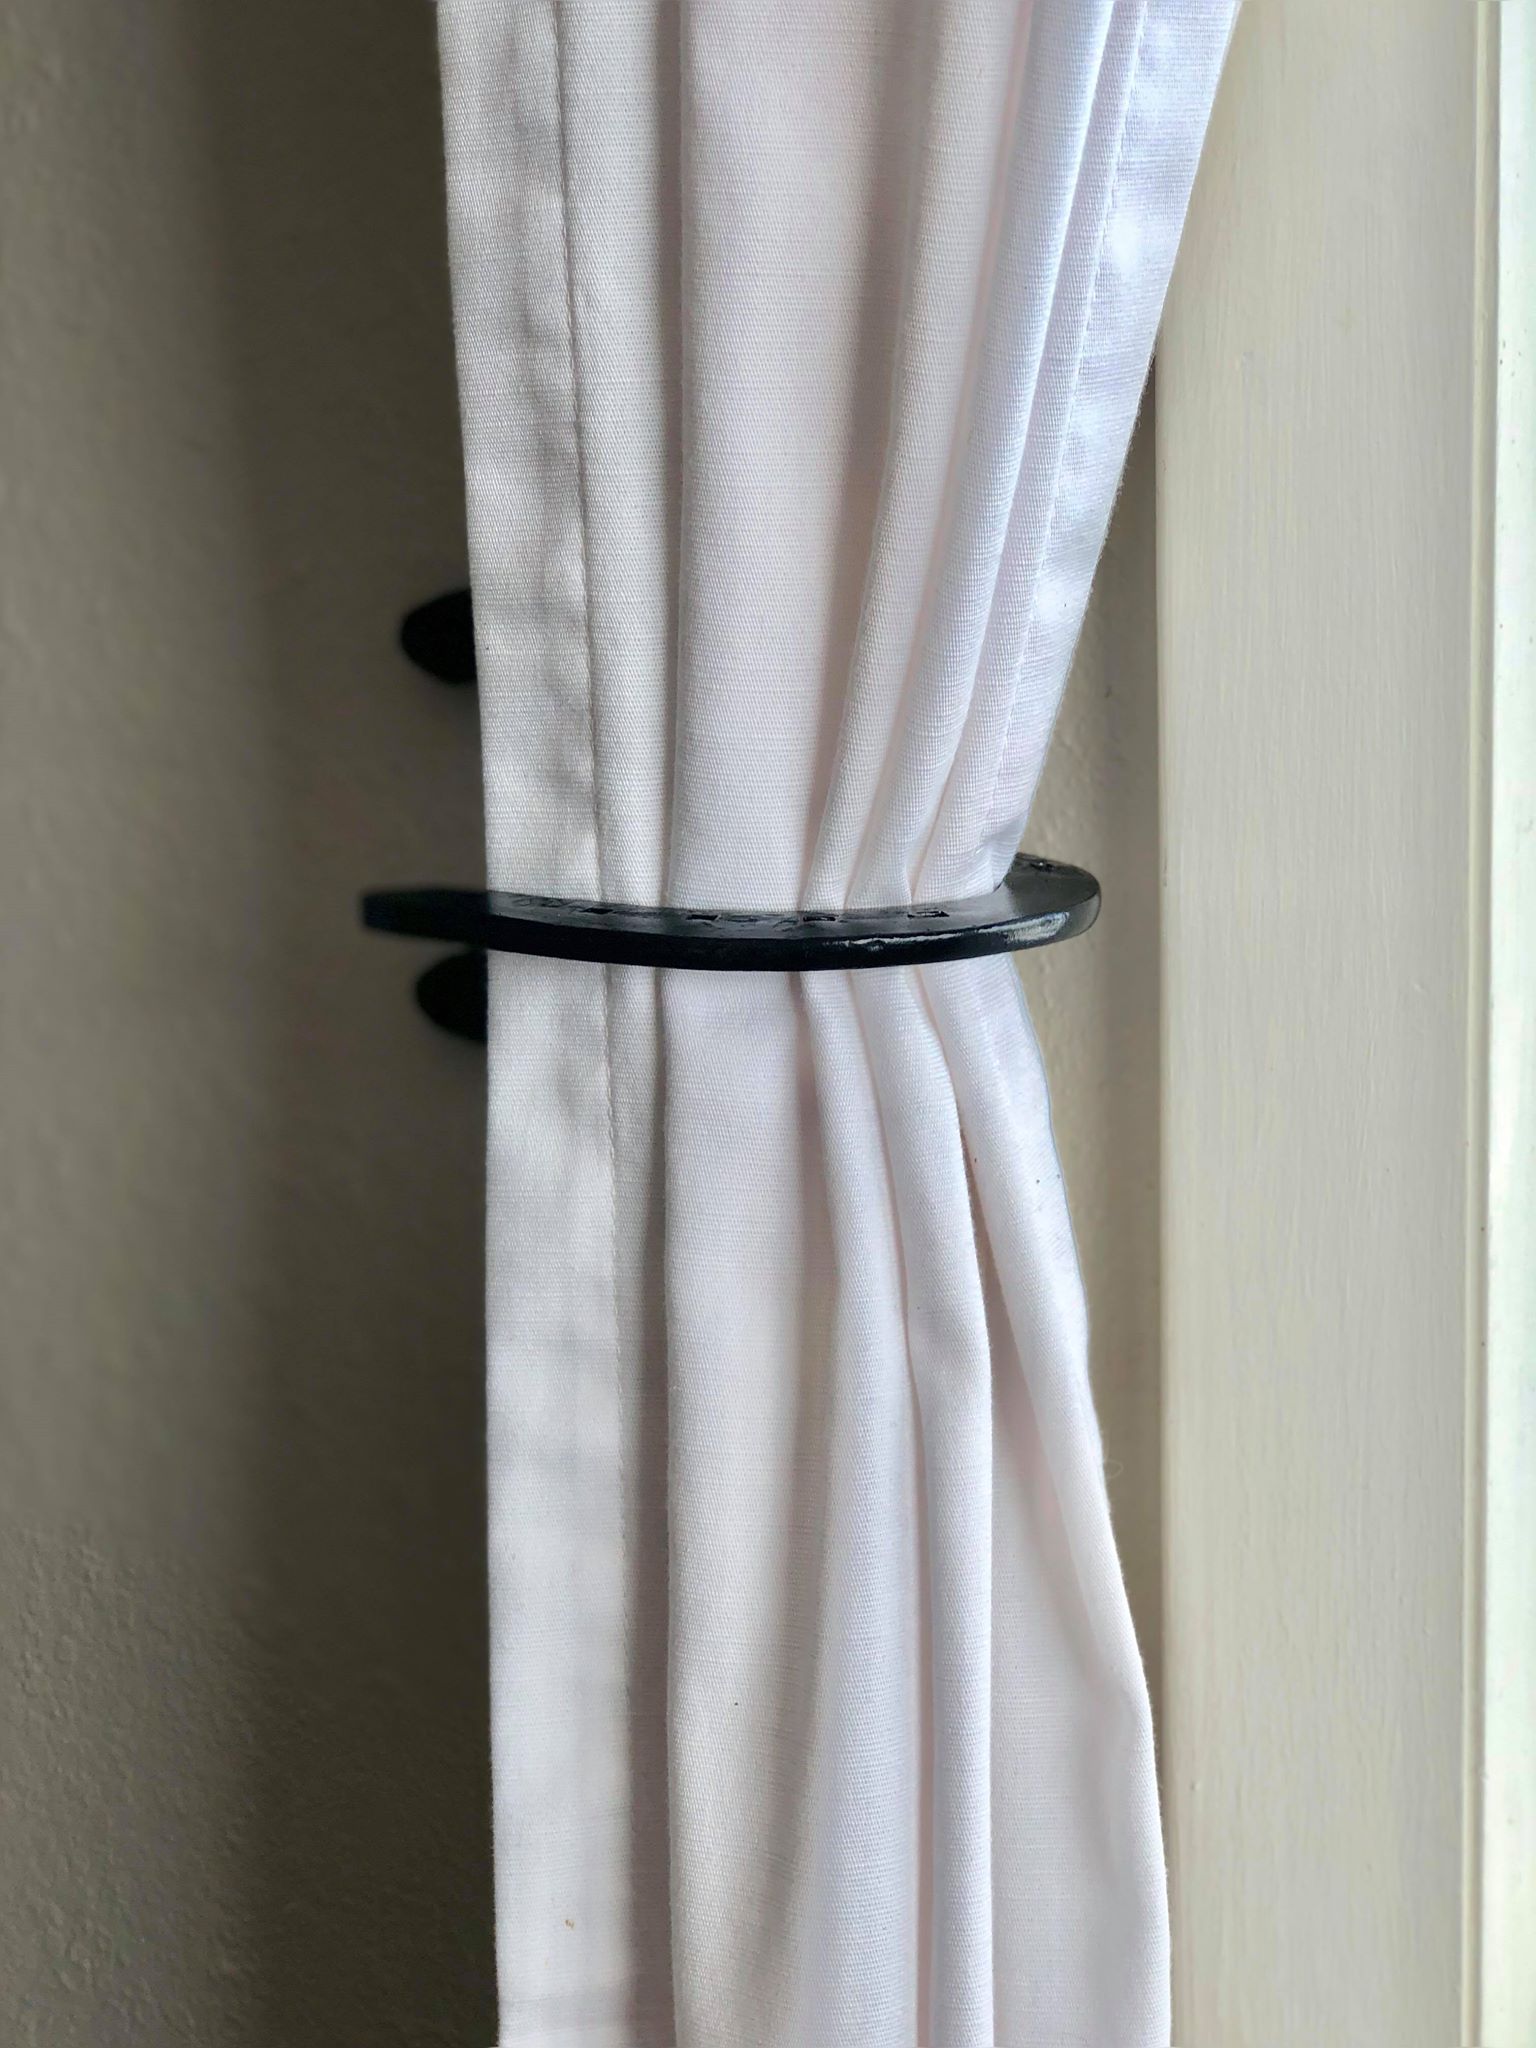 curtain tie backs